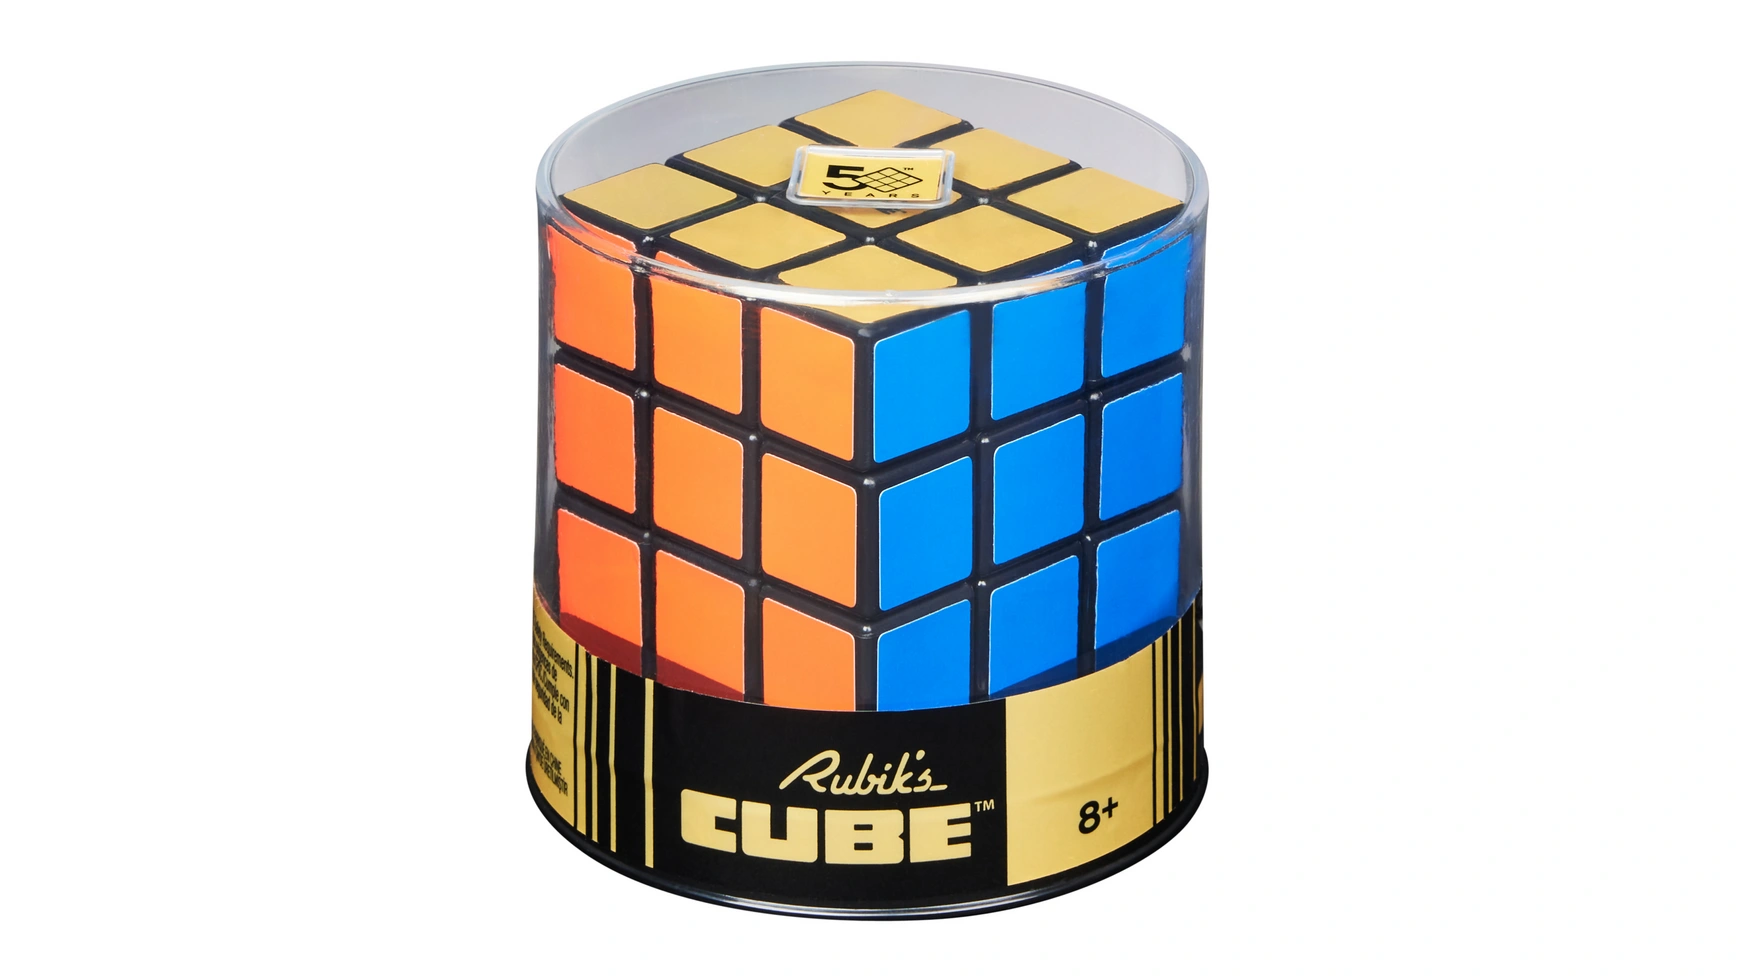 Ретро-кубик Рубика 3x3 Кубик Рубика кубик 3x3, внешний вид которого напоминает оригинал 50-летней давности Spin Master кубик рубика магнитный уменьшенный мини yj 3x3 zhilong m mini color